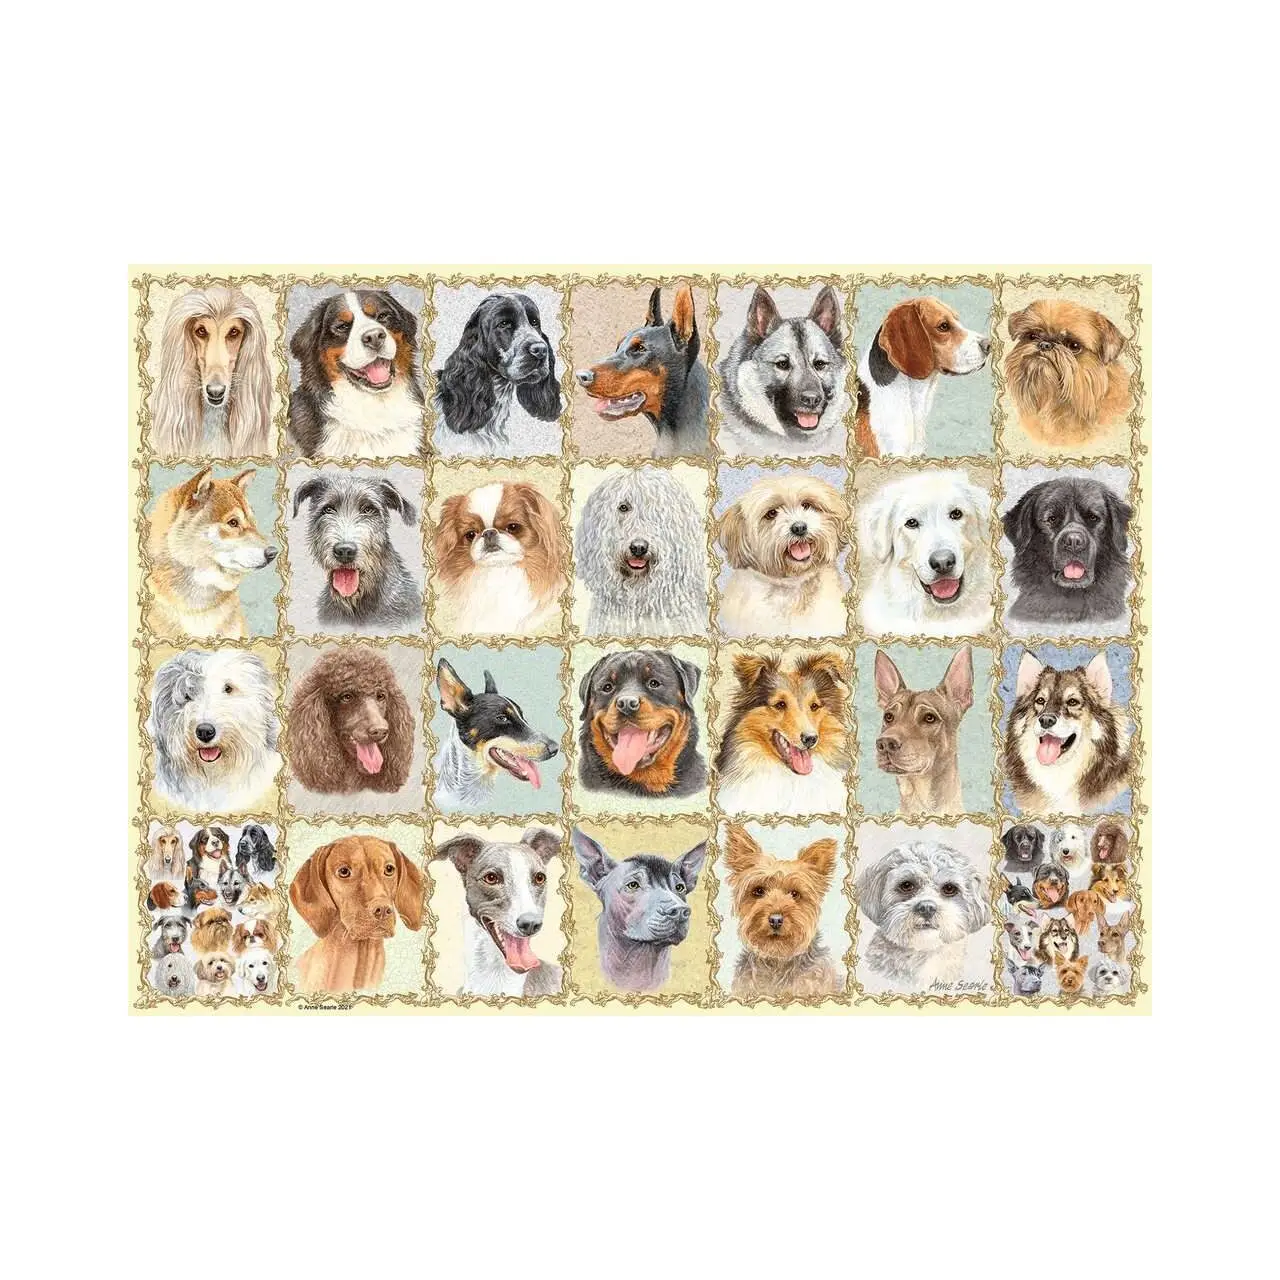 Puzzle Portr盲ts von Hunden 500 Teile